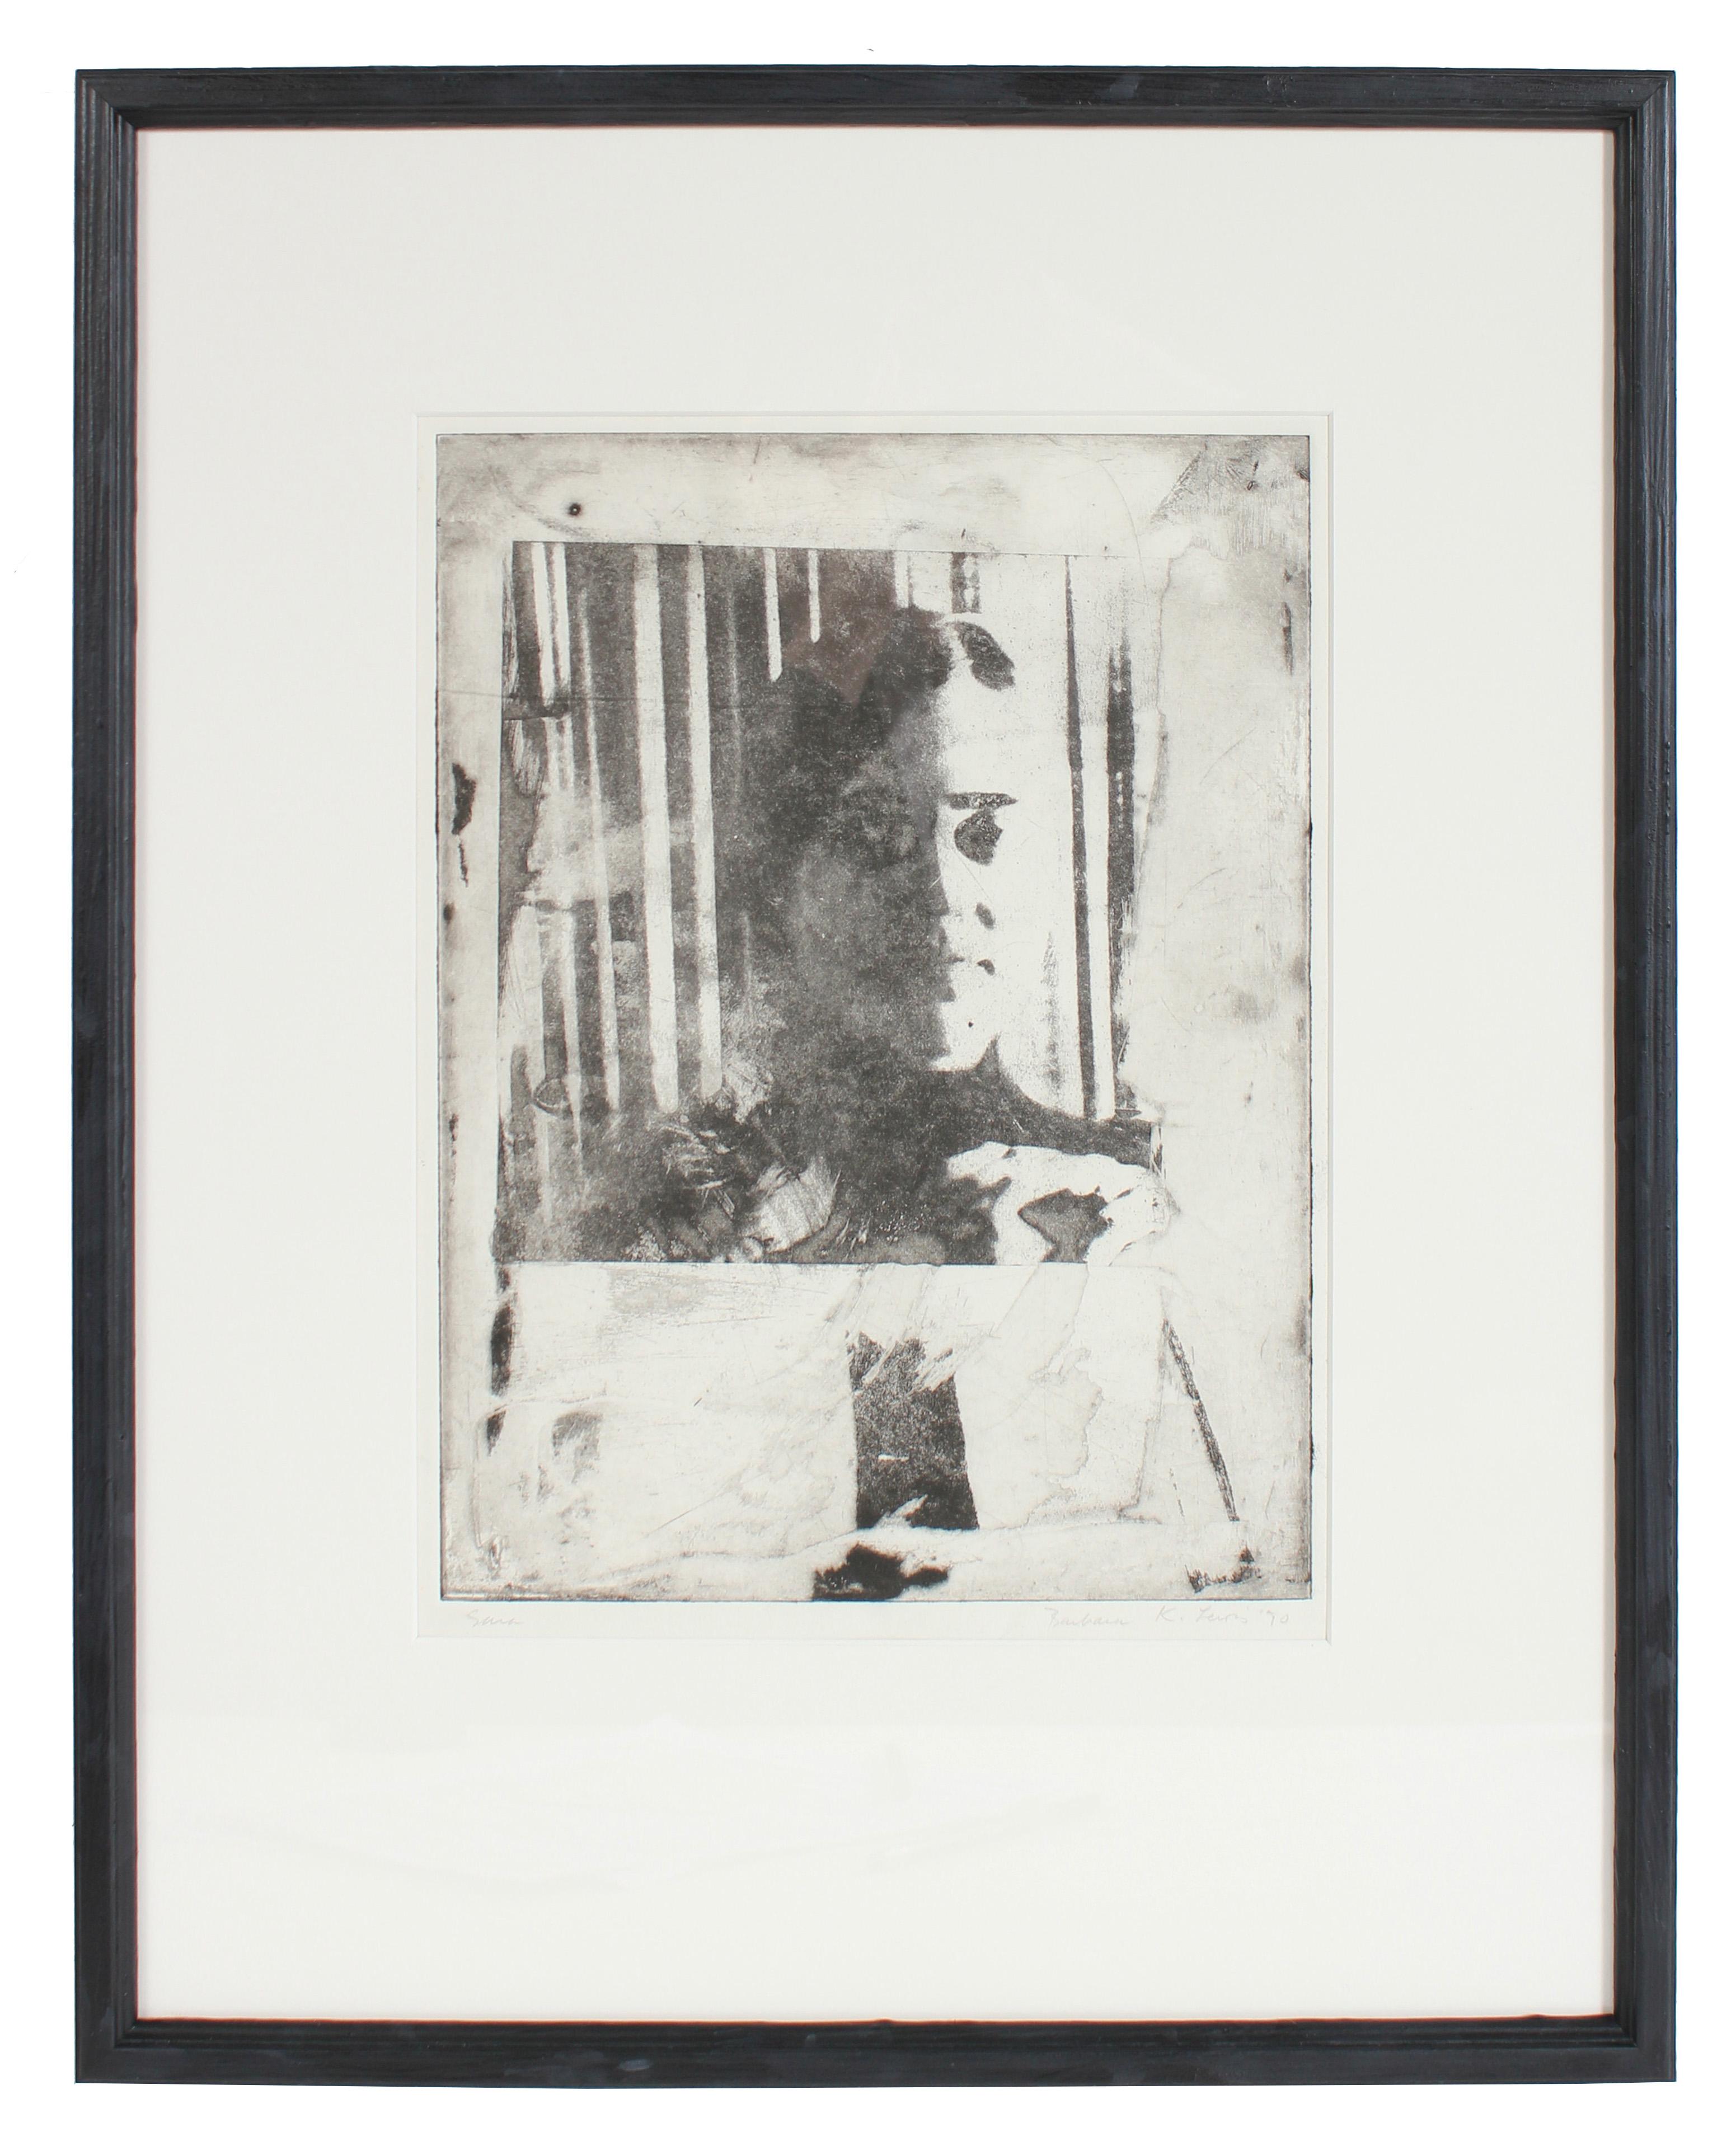 Barbara Lewis Portrait Print - "Sara" Black and White Portrait of a Woman, Photo Emulsion Print, 1970